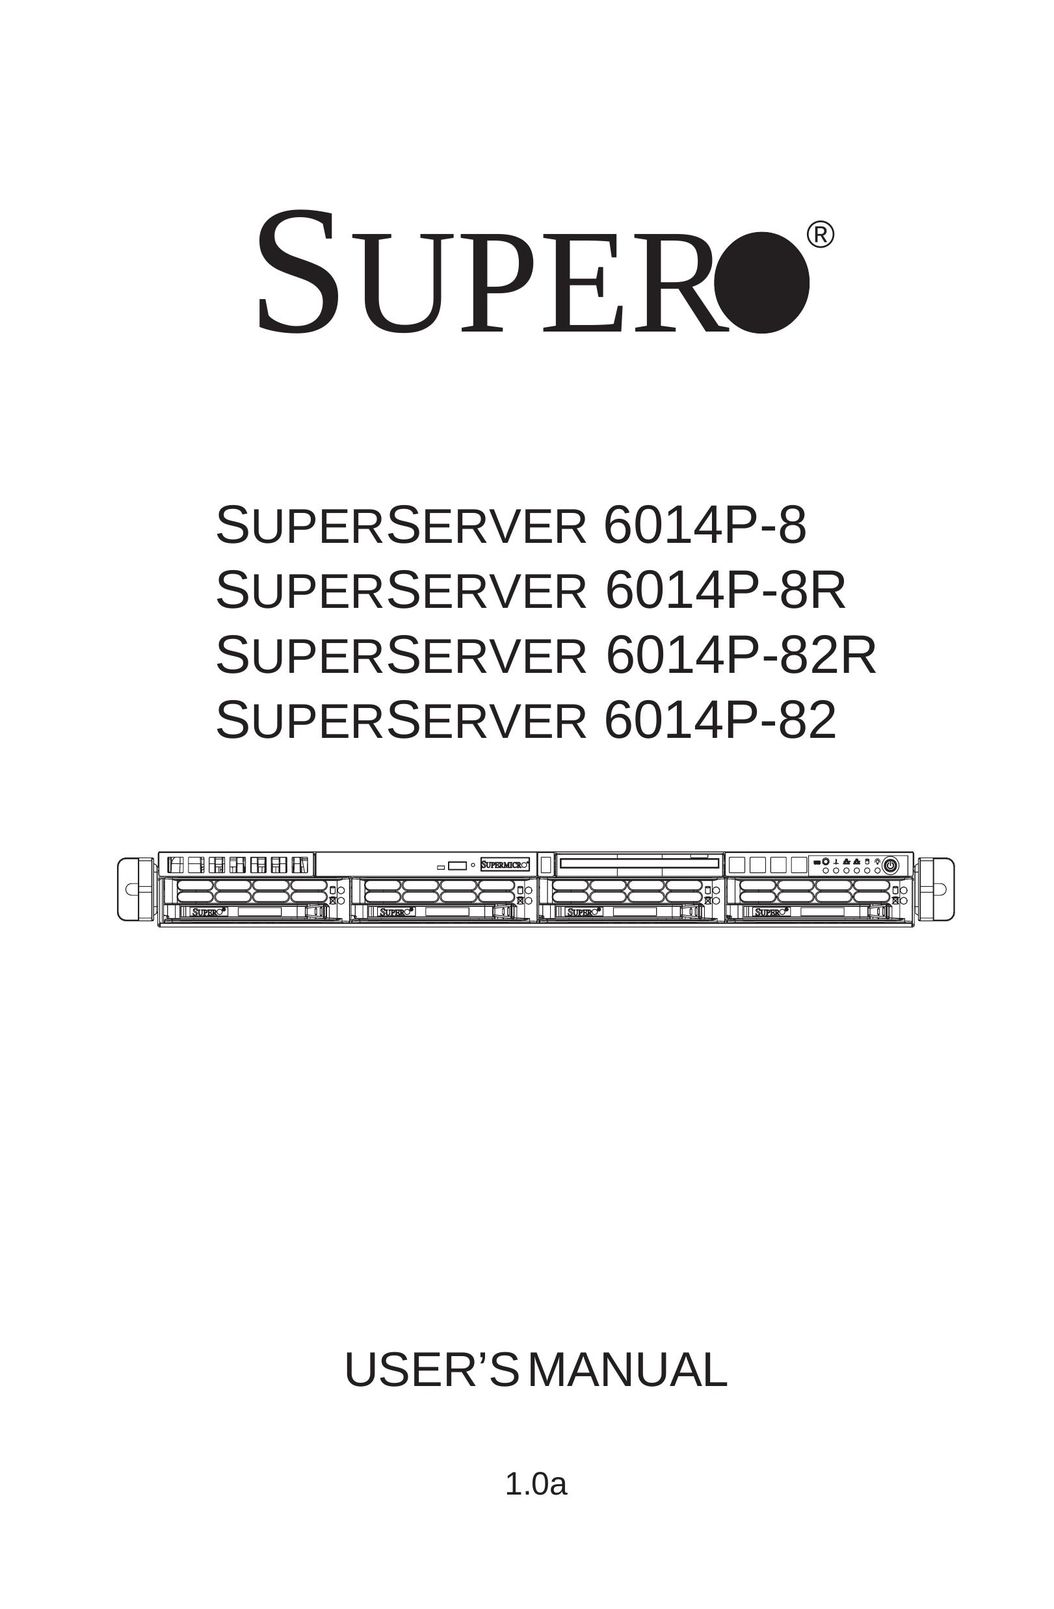 SUPER MICRO Computer 6014P-82 Home Theater Server User Manual